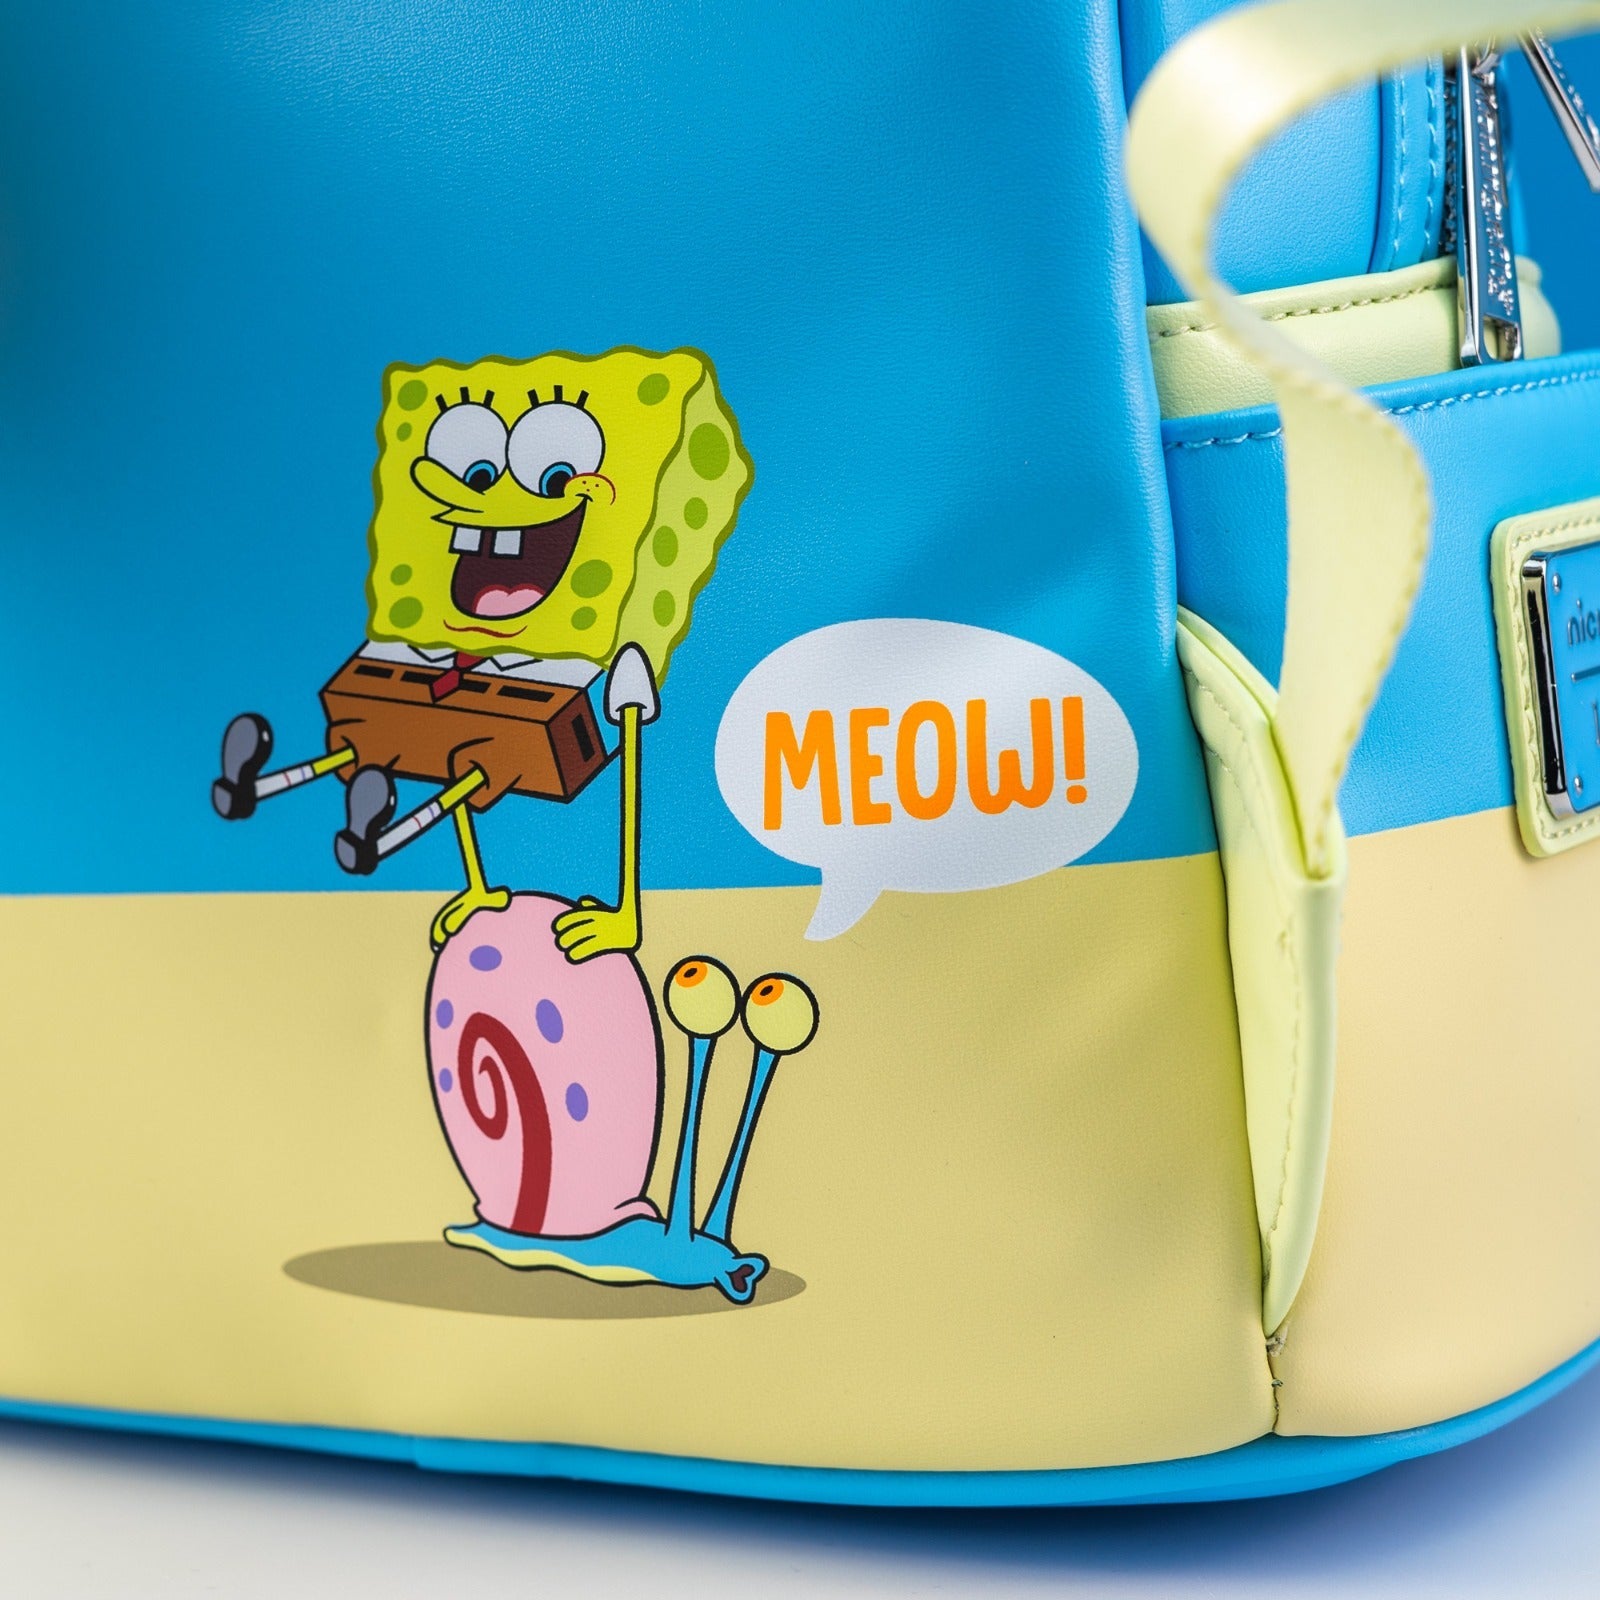 Loungefly x Nickelodeon SpongeBob Squarepants Gary Cosplay Mini Backpack - GeekCore